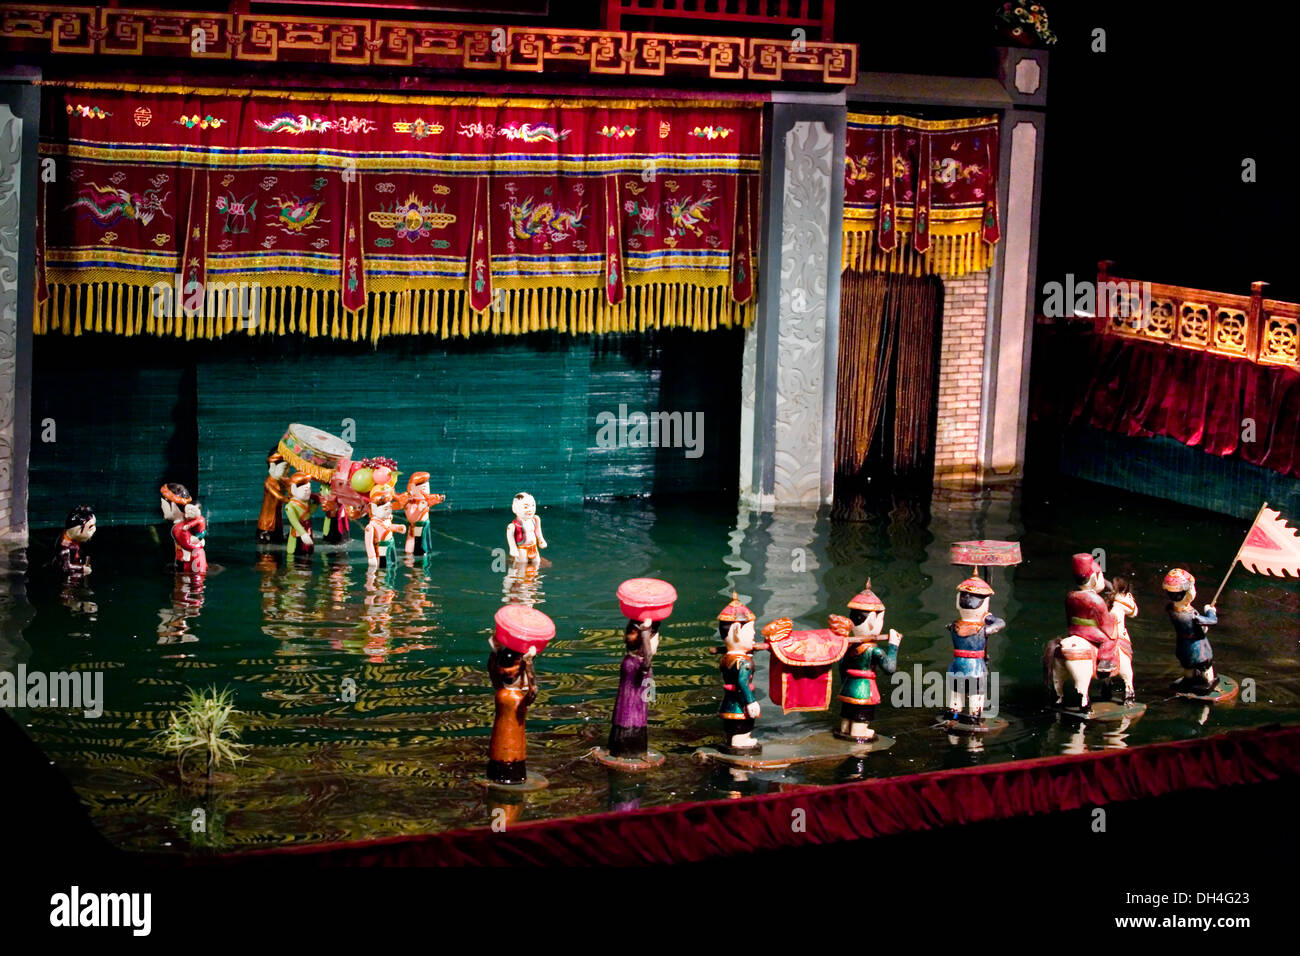 Thang Long Water Puppet Theatre – Hanoi, Vietnam - Atlas Obscura